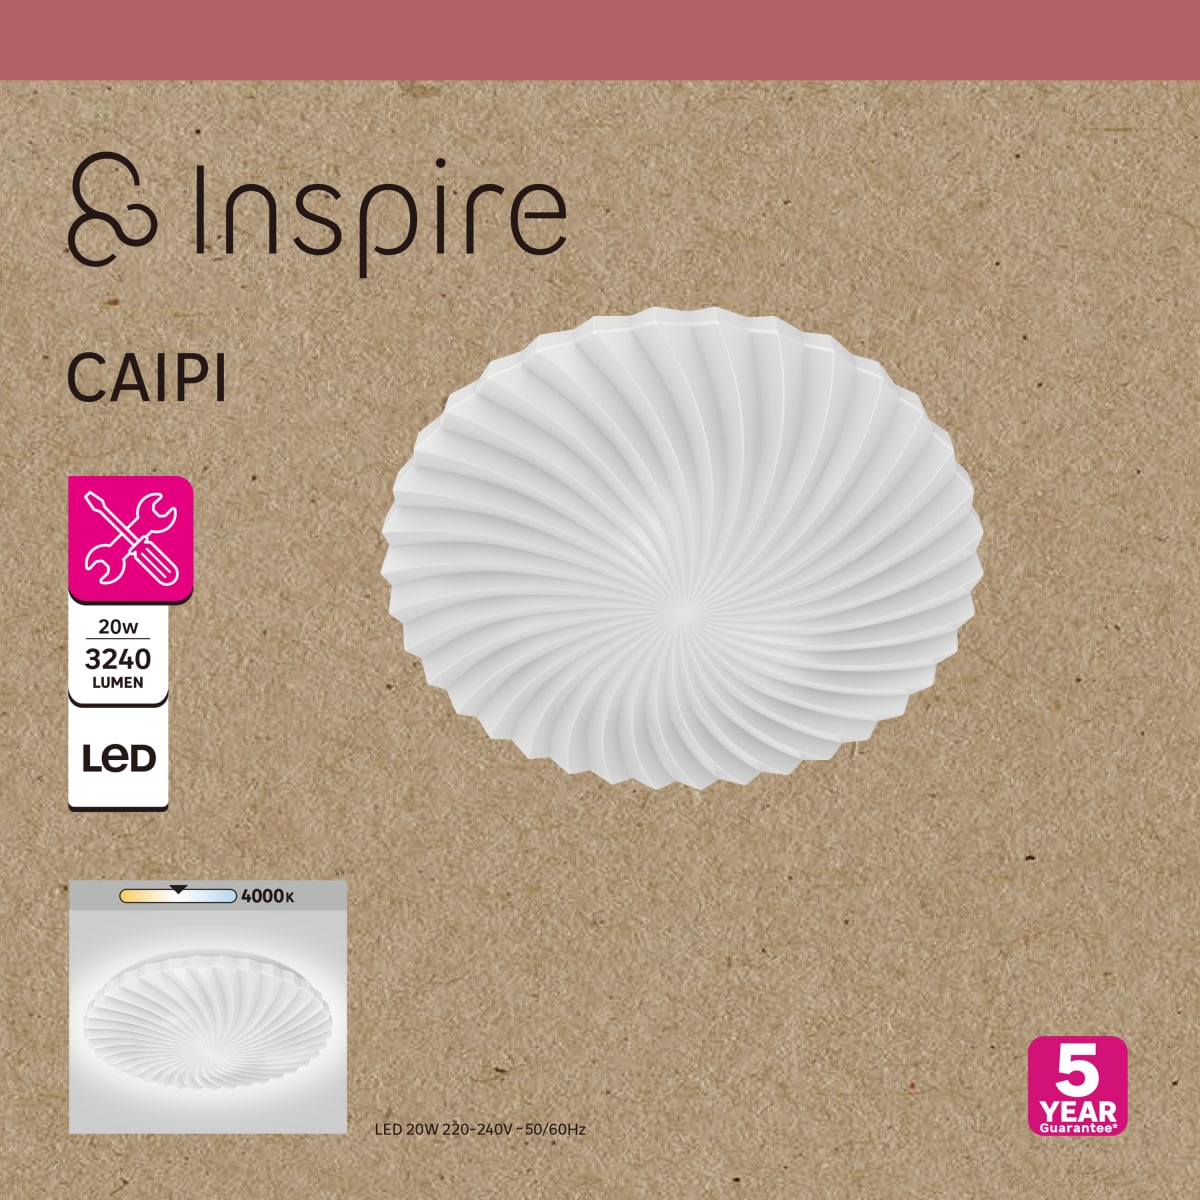 CAIPI METAL CEILING LAMP WHITE D38 CM LED 20W NATURAL LIGHT